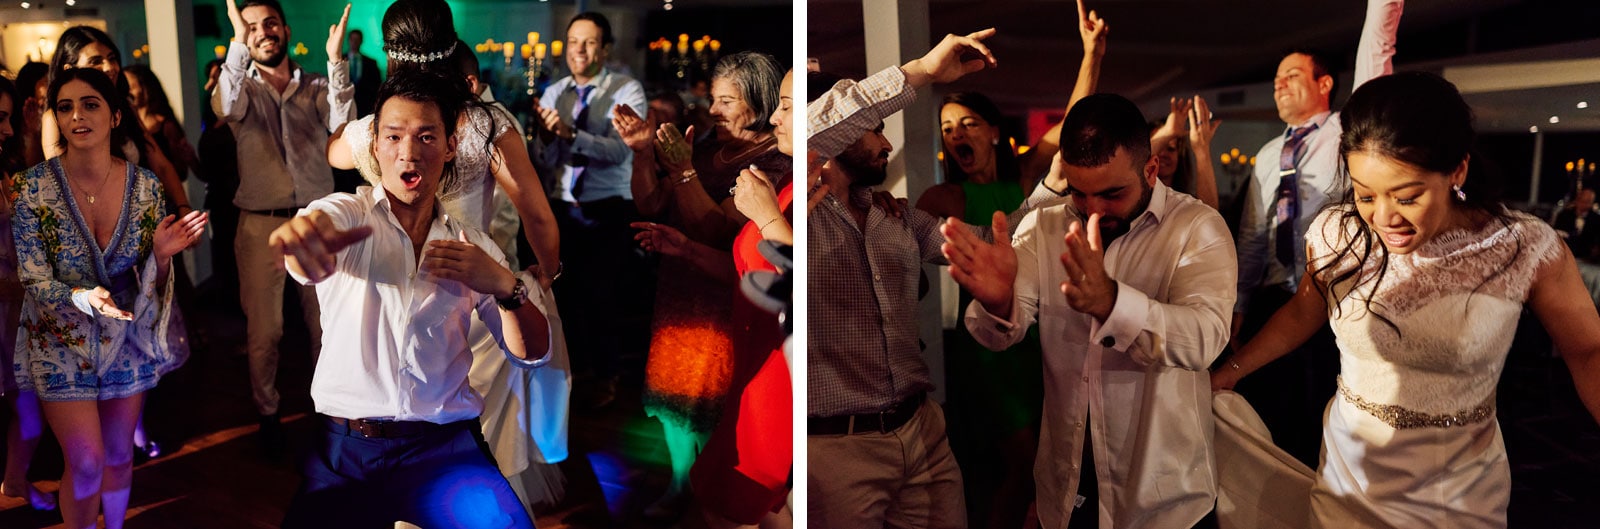 The Kyle Bay wedding reception dancing